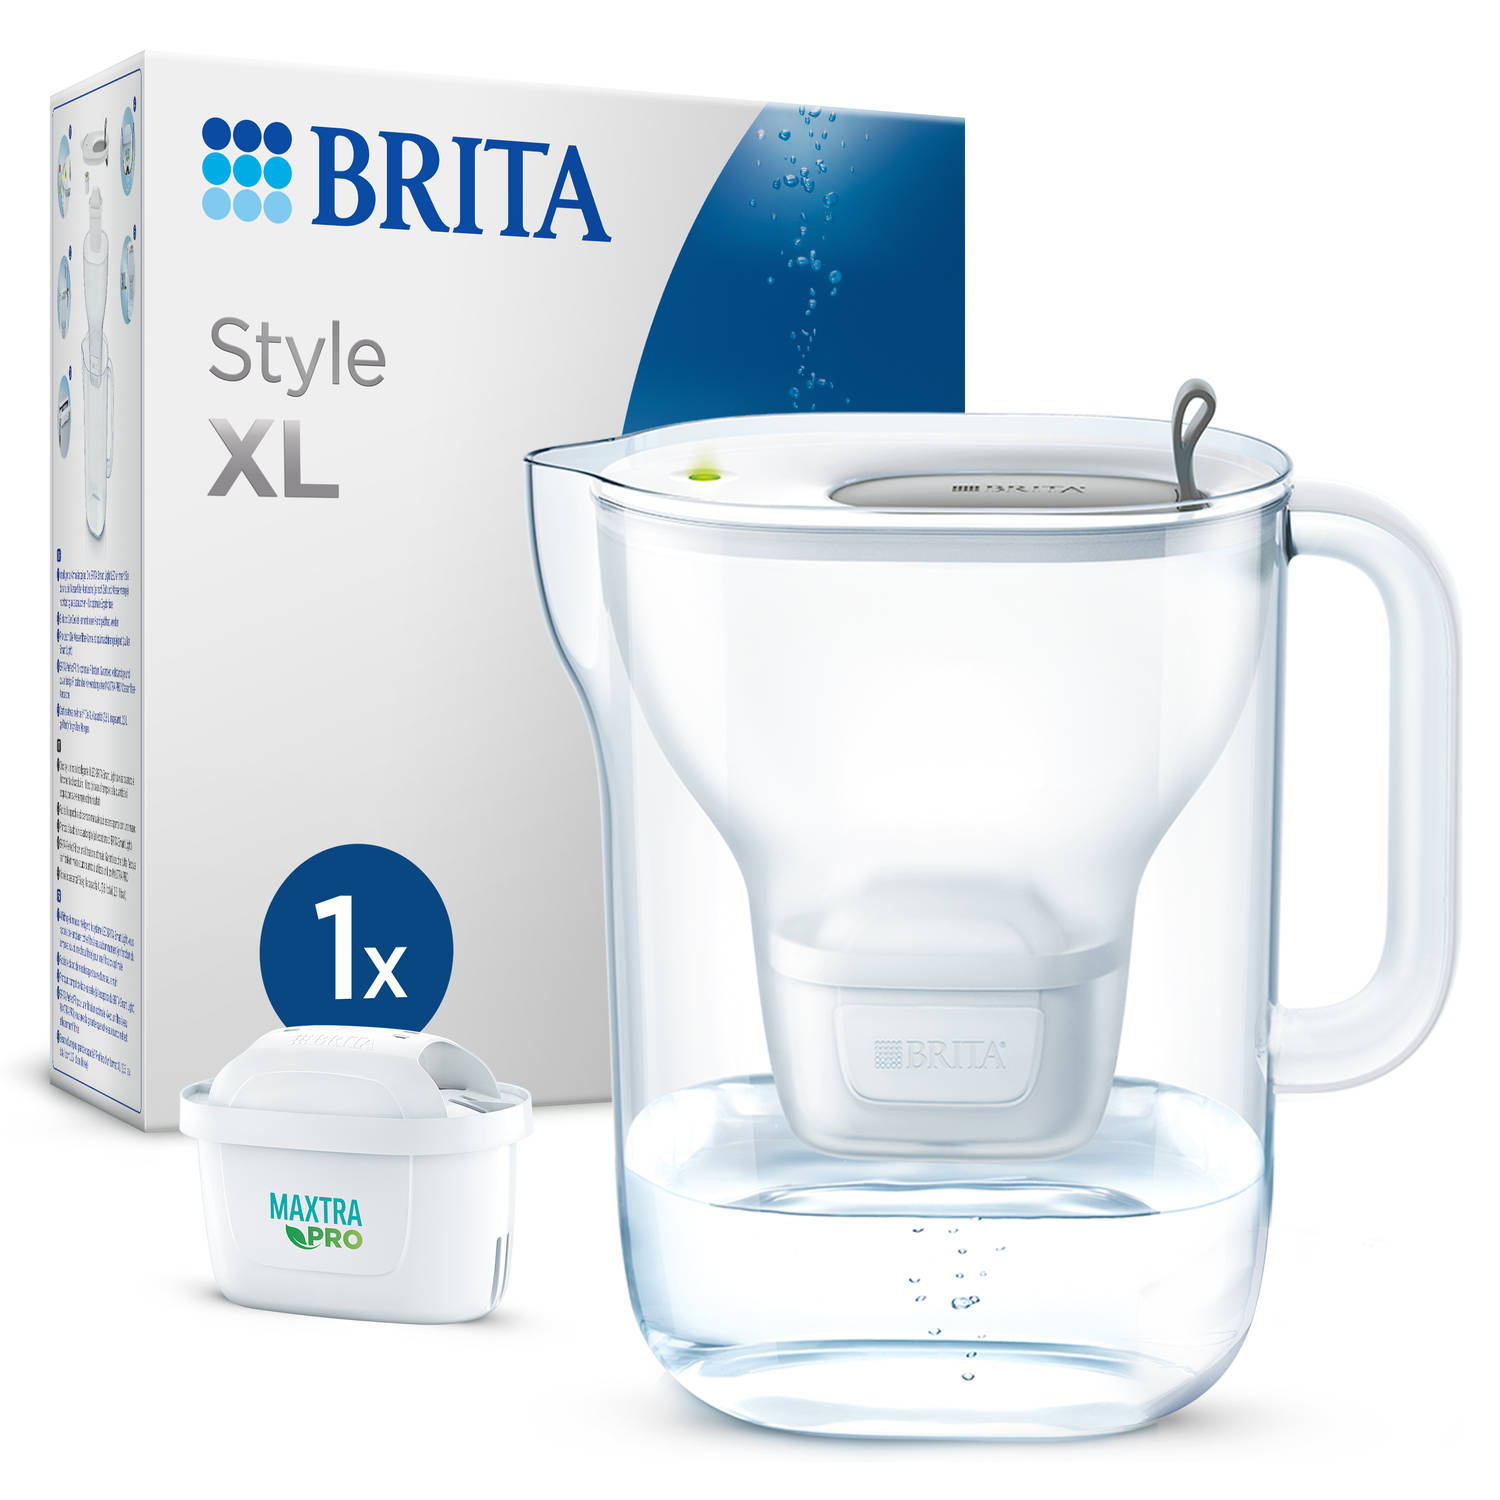 BRITA - Waterfilterkan - Style XL - Inclusief 1 MAXTRA PRO ALL-IN-ONE - Grijs - 3,5L